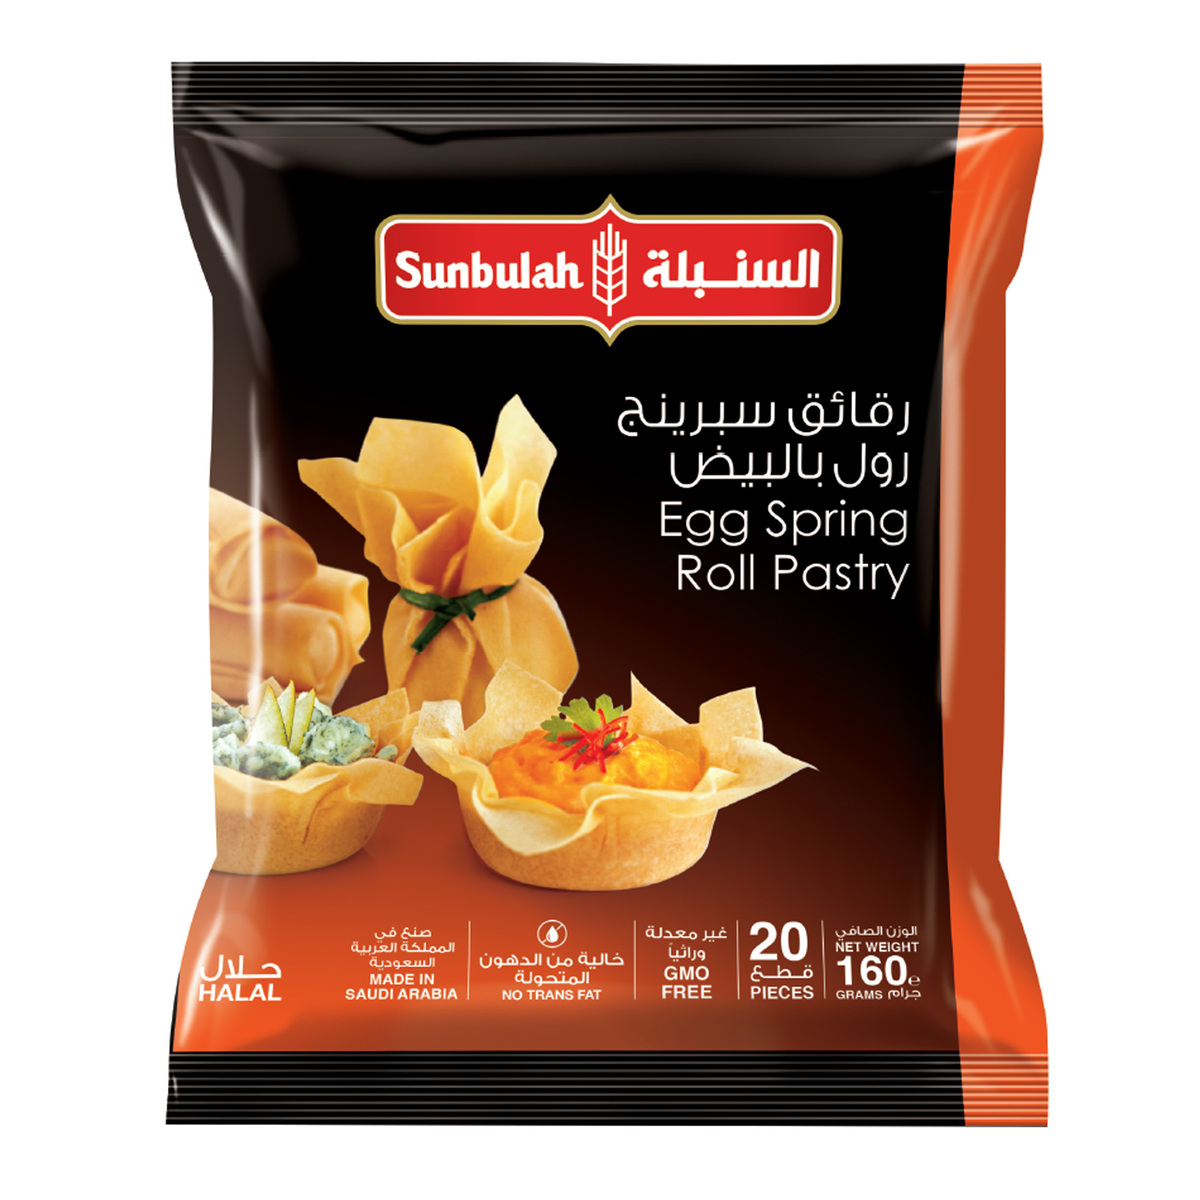 Buy Sunbulah Egg Spring Roll Pastry 160 g Online at Best Price | Frozen Pastry | Lulu Egypt in Saudi Arabia